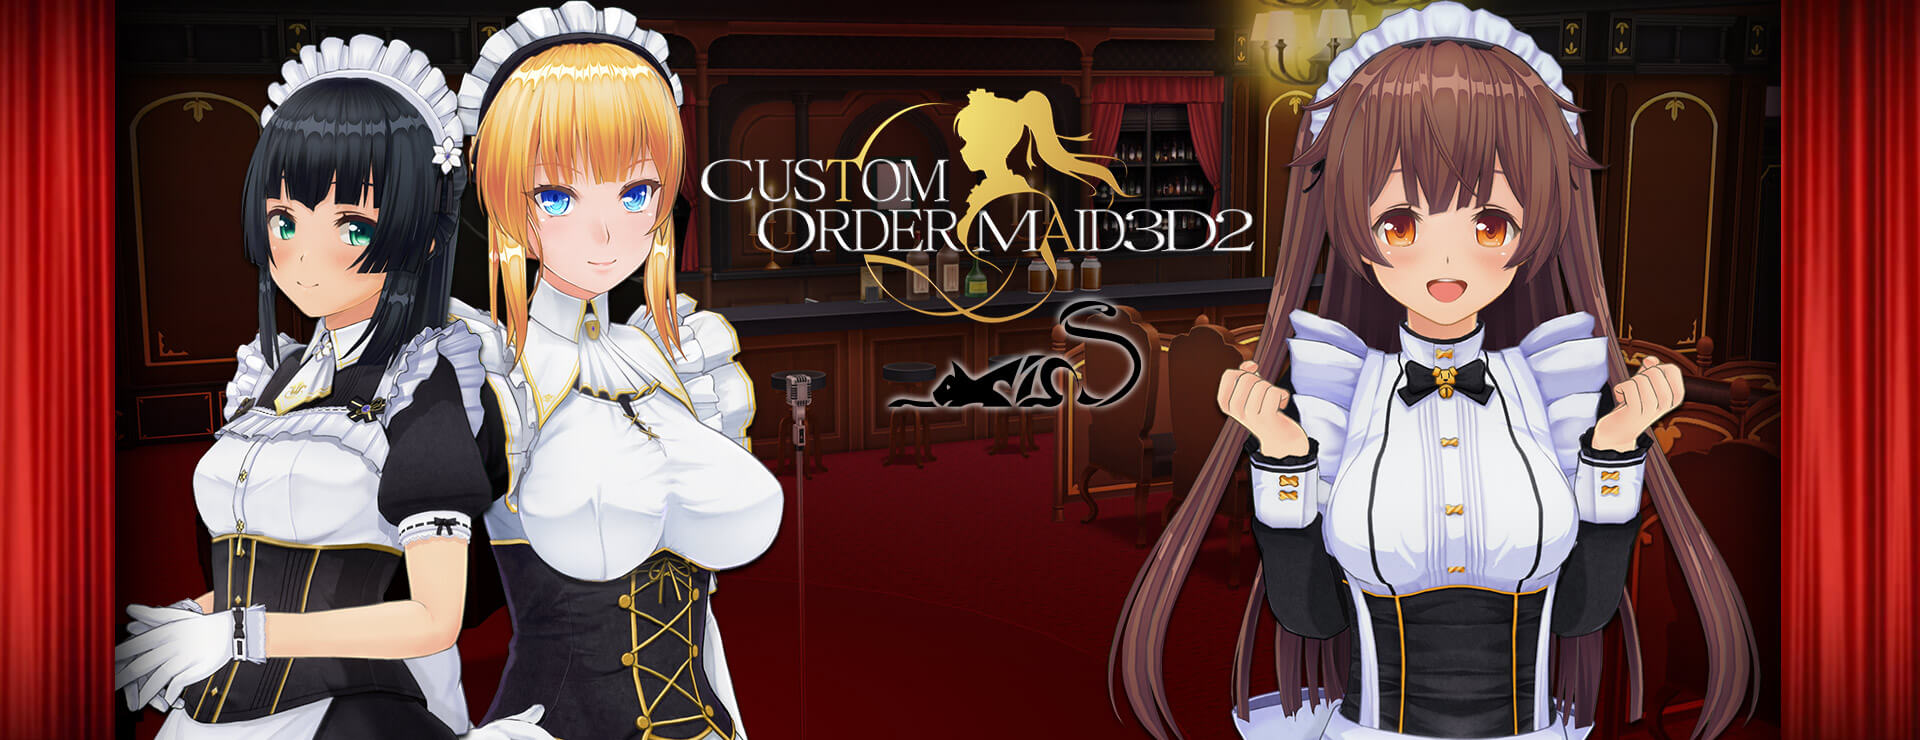 Custom Order Maid 3D 2 thumbnail